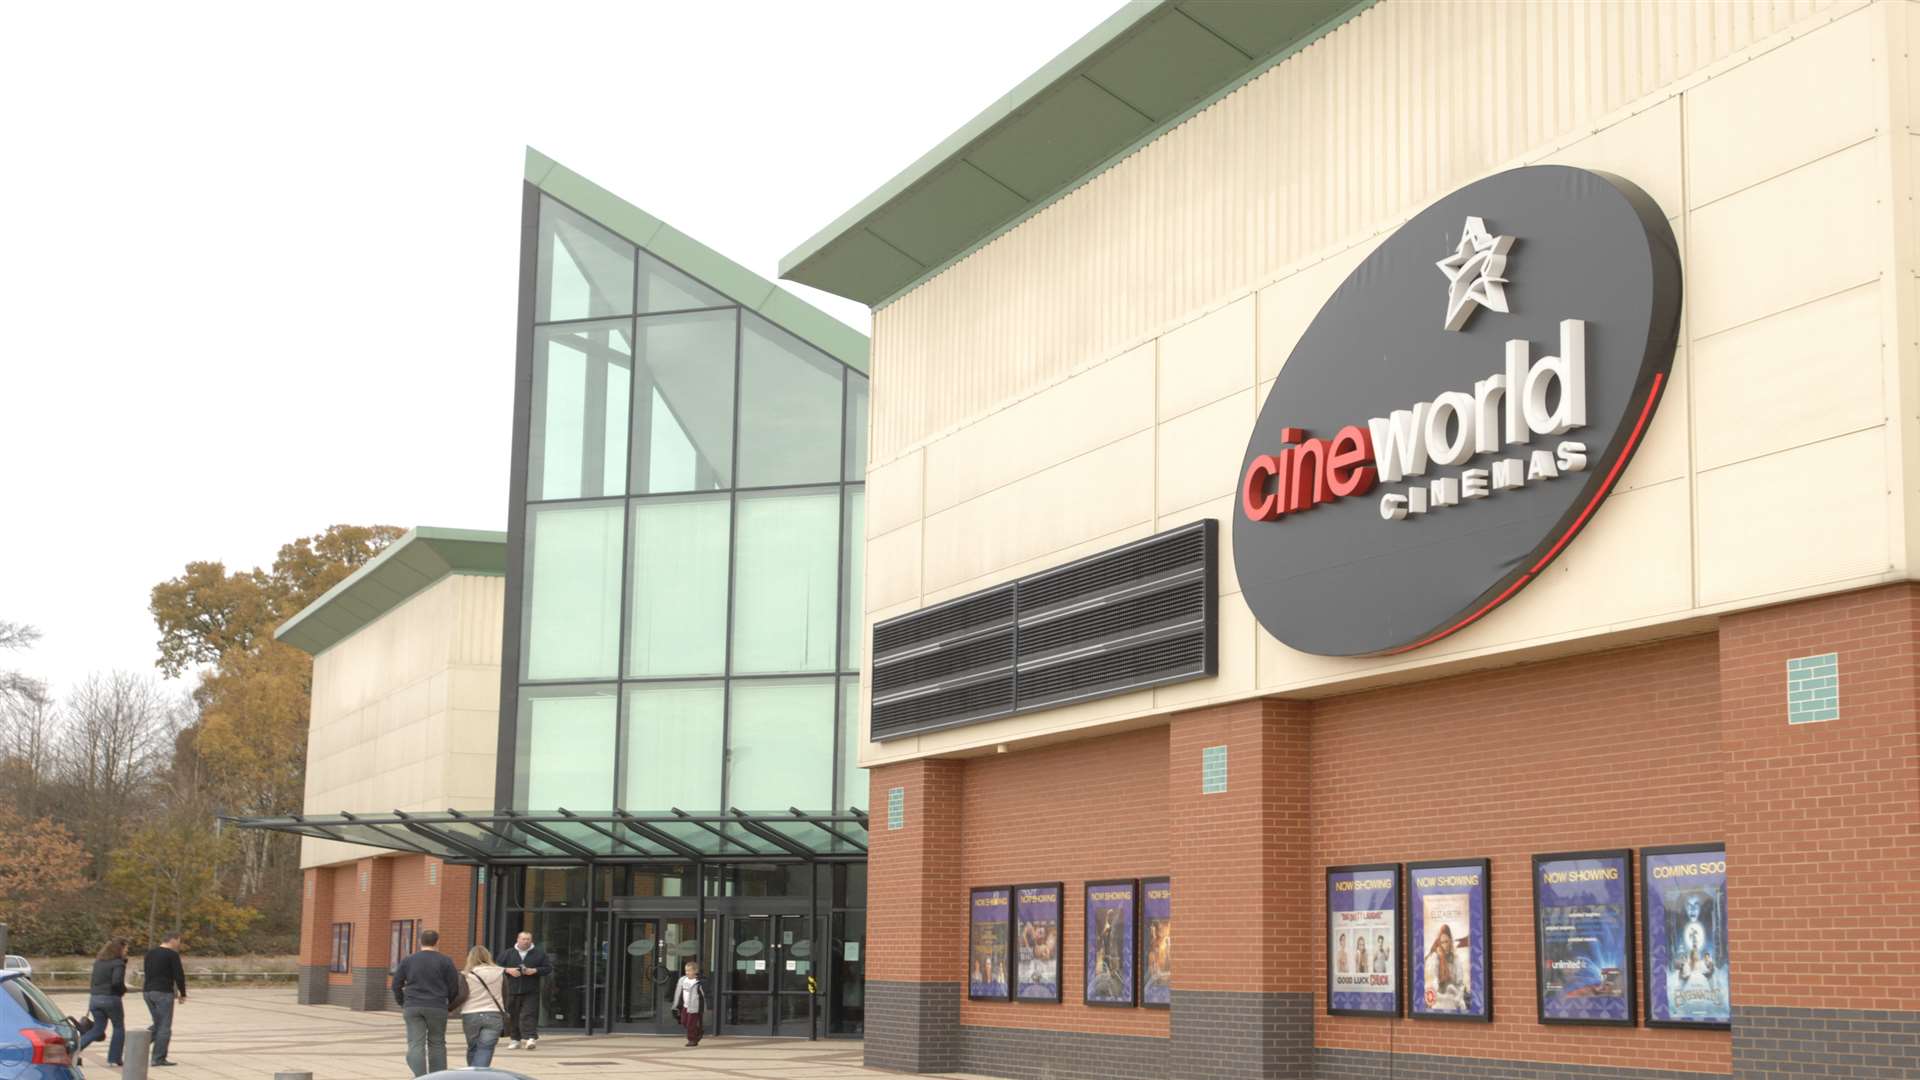 Customers were surprised to see Sir Paul at Cineworld in Ashford